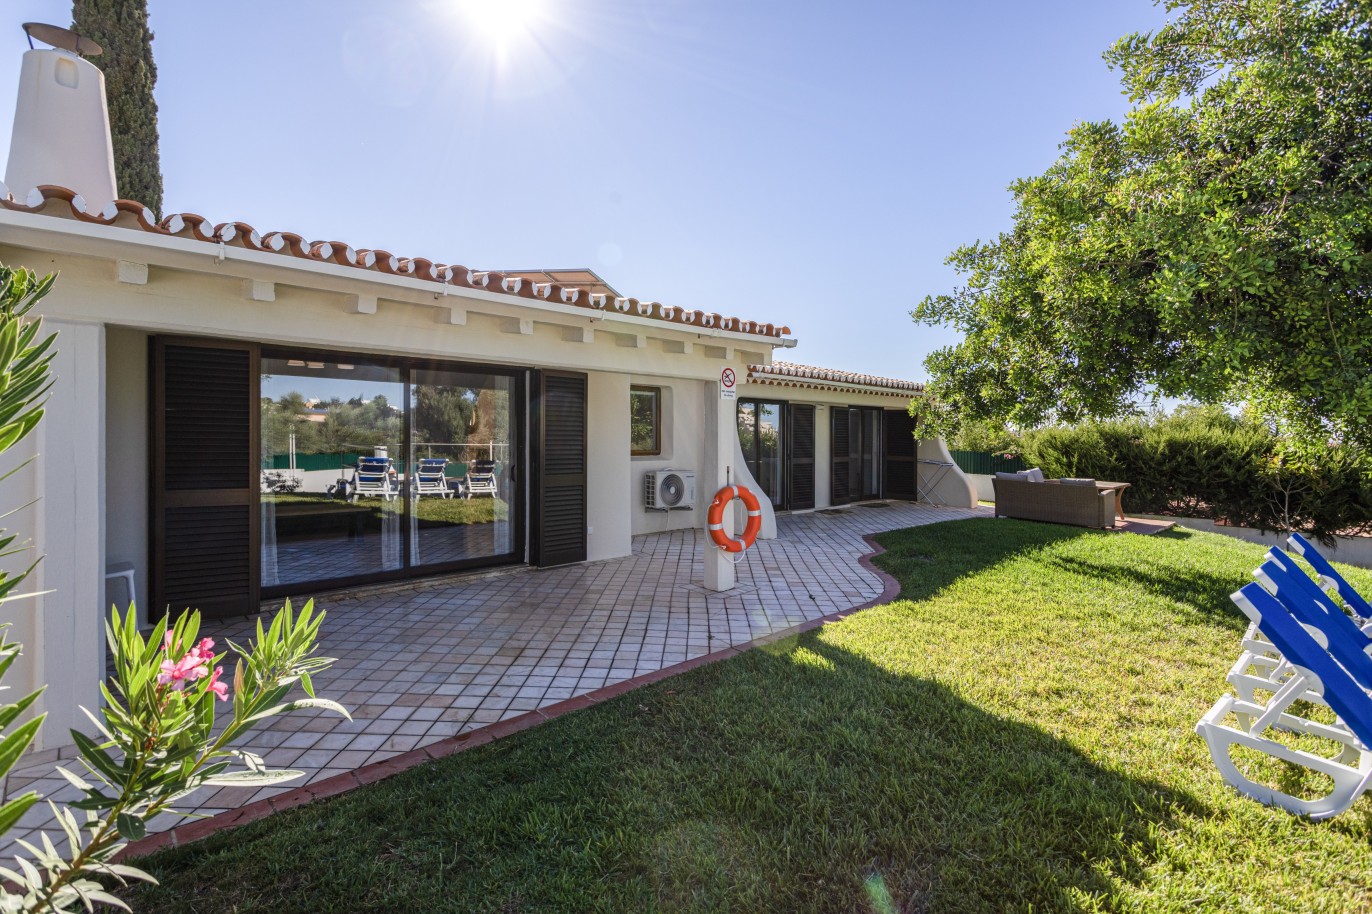 4 bedroom villa with pool, for sale in Albufeira, Algarve_233611